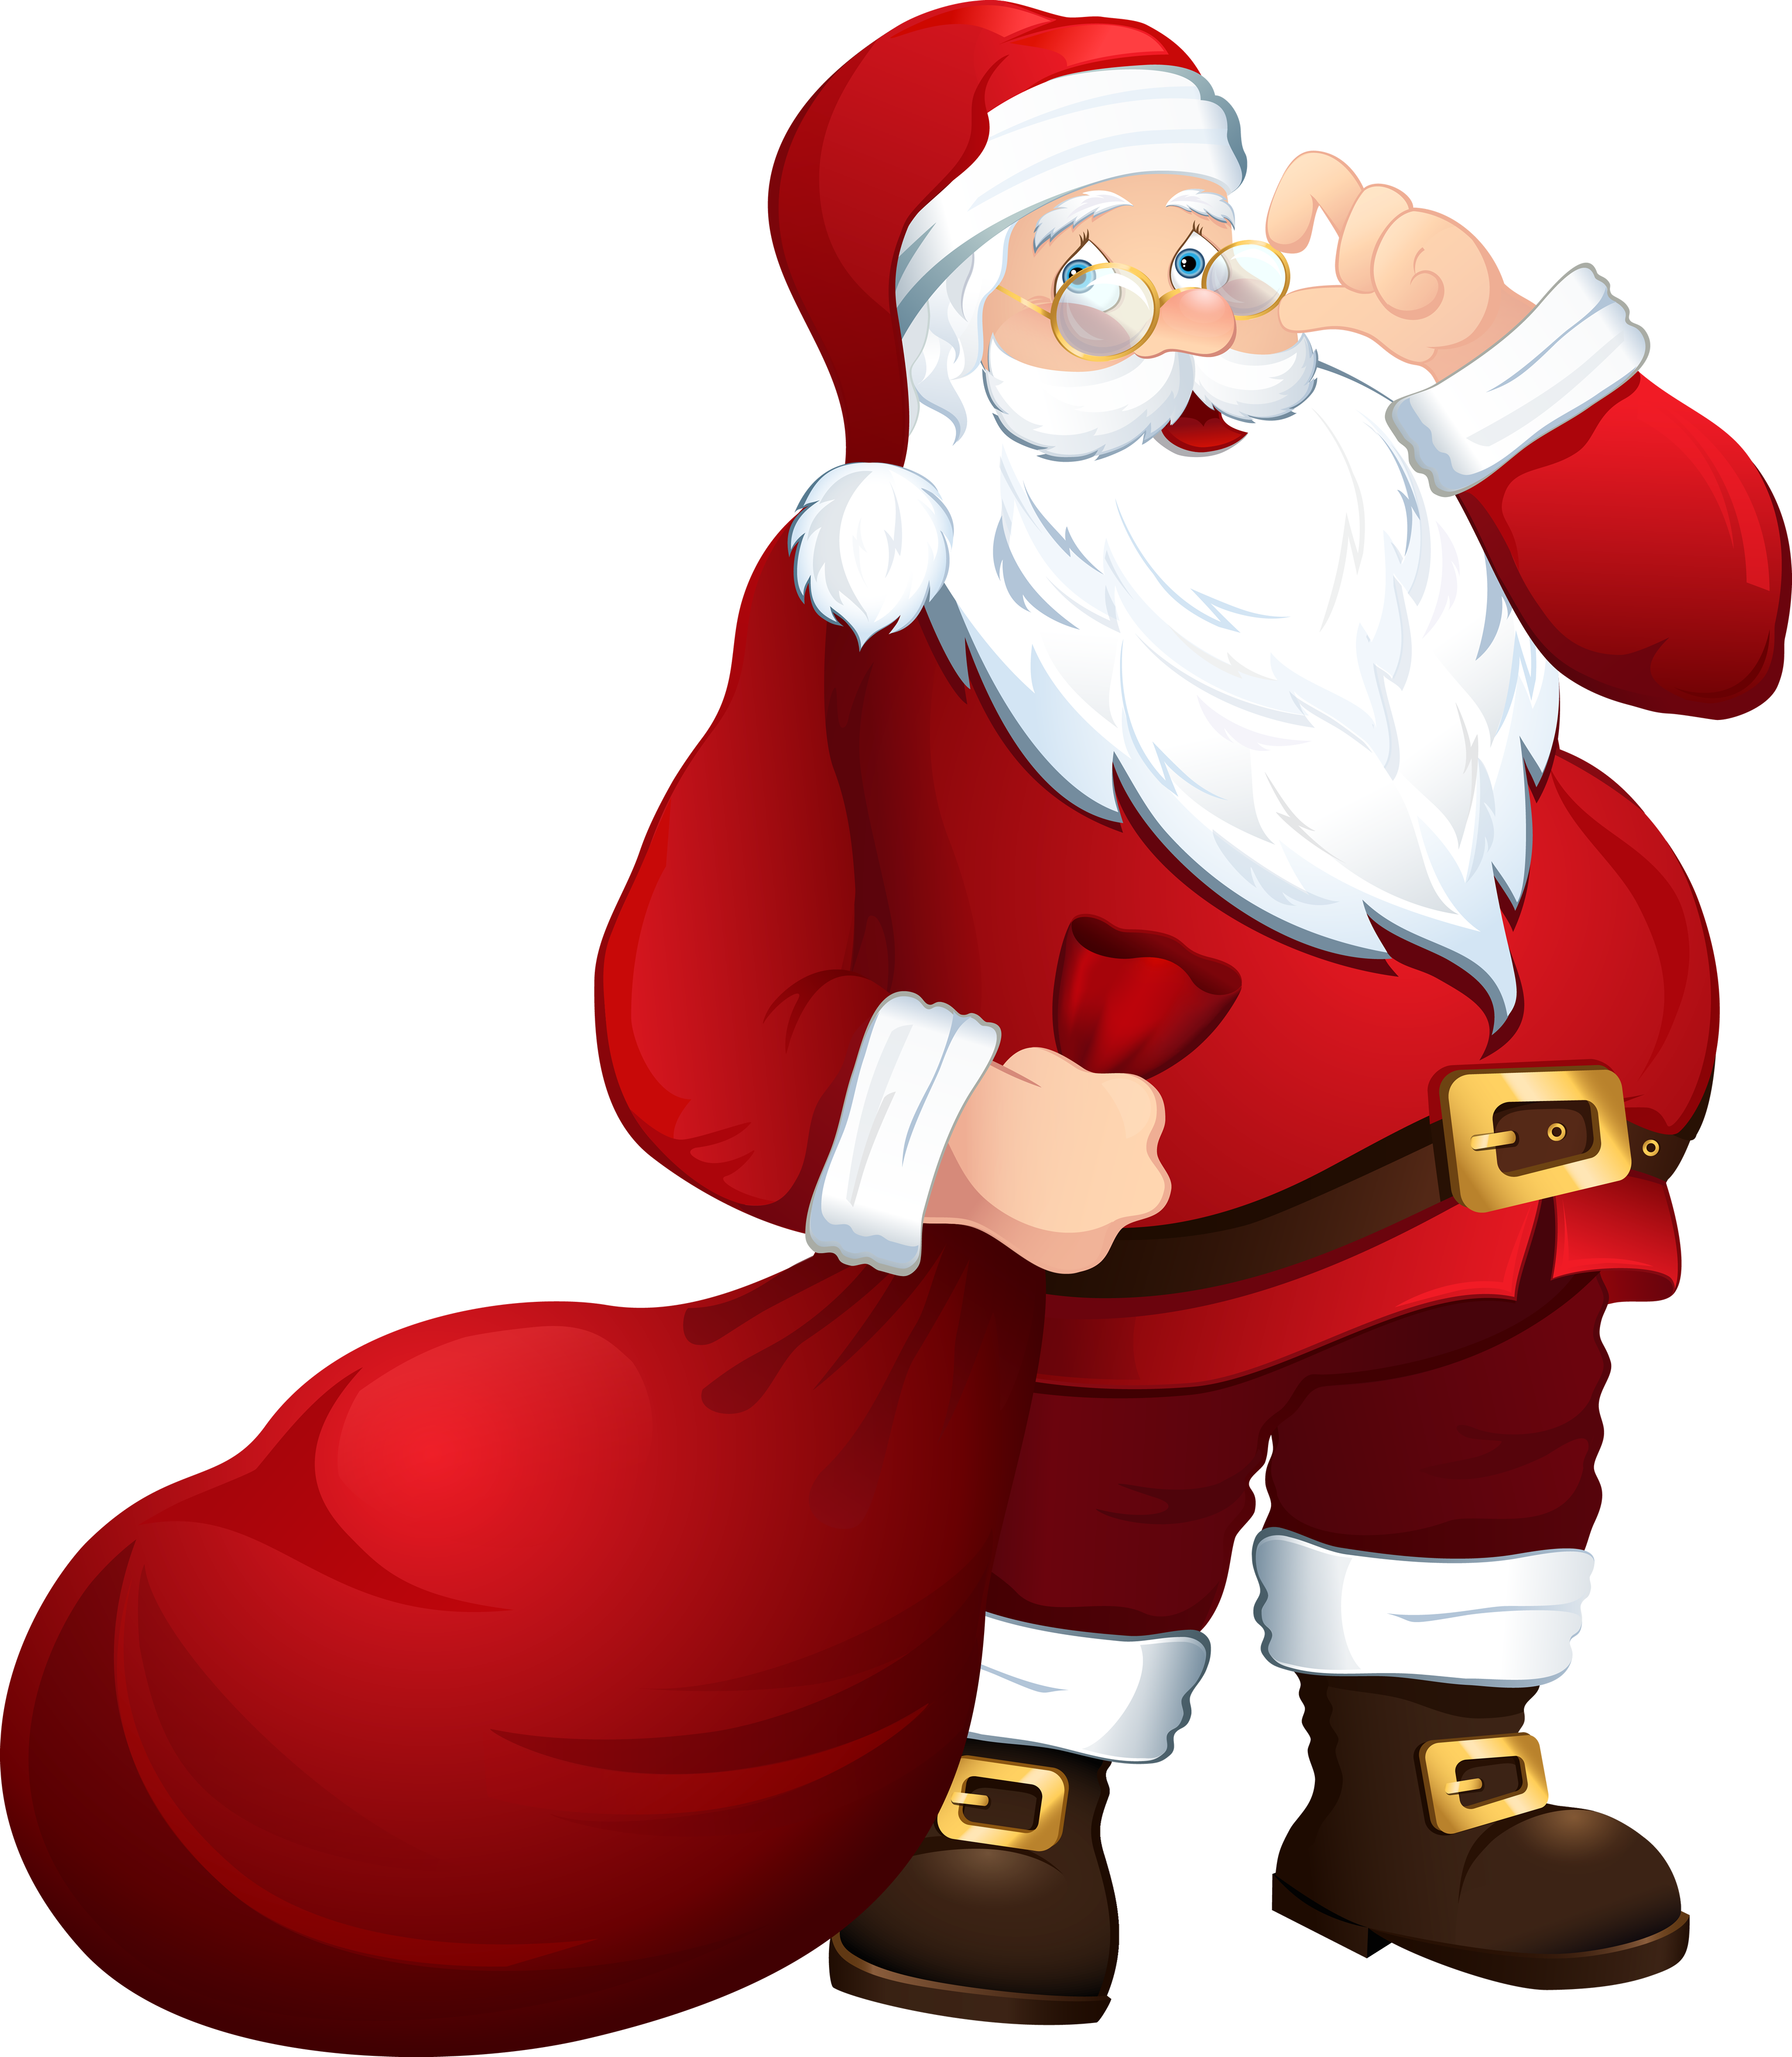 Santa Claus PNG images free download, Santa Claus PNG.